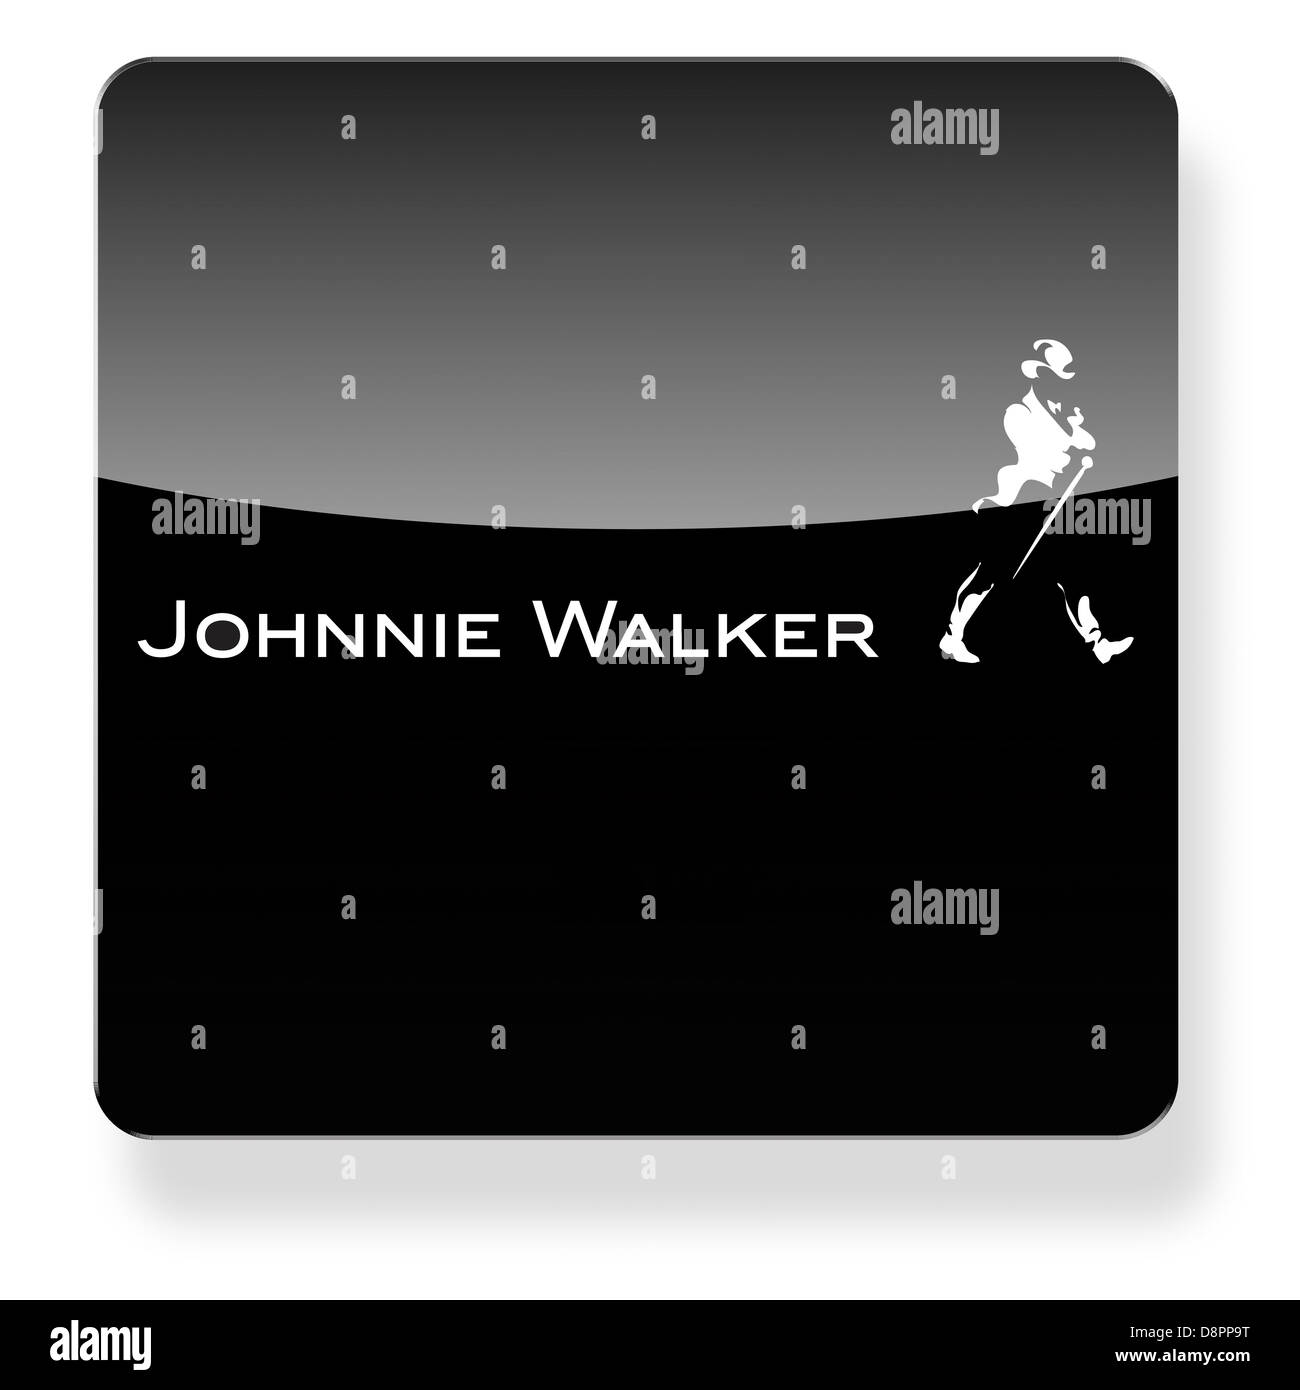 Johnnie Walker • Limited Edition on Behance